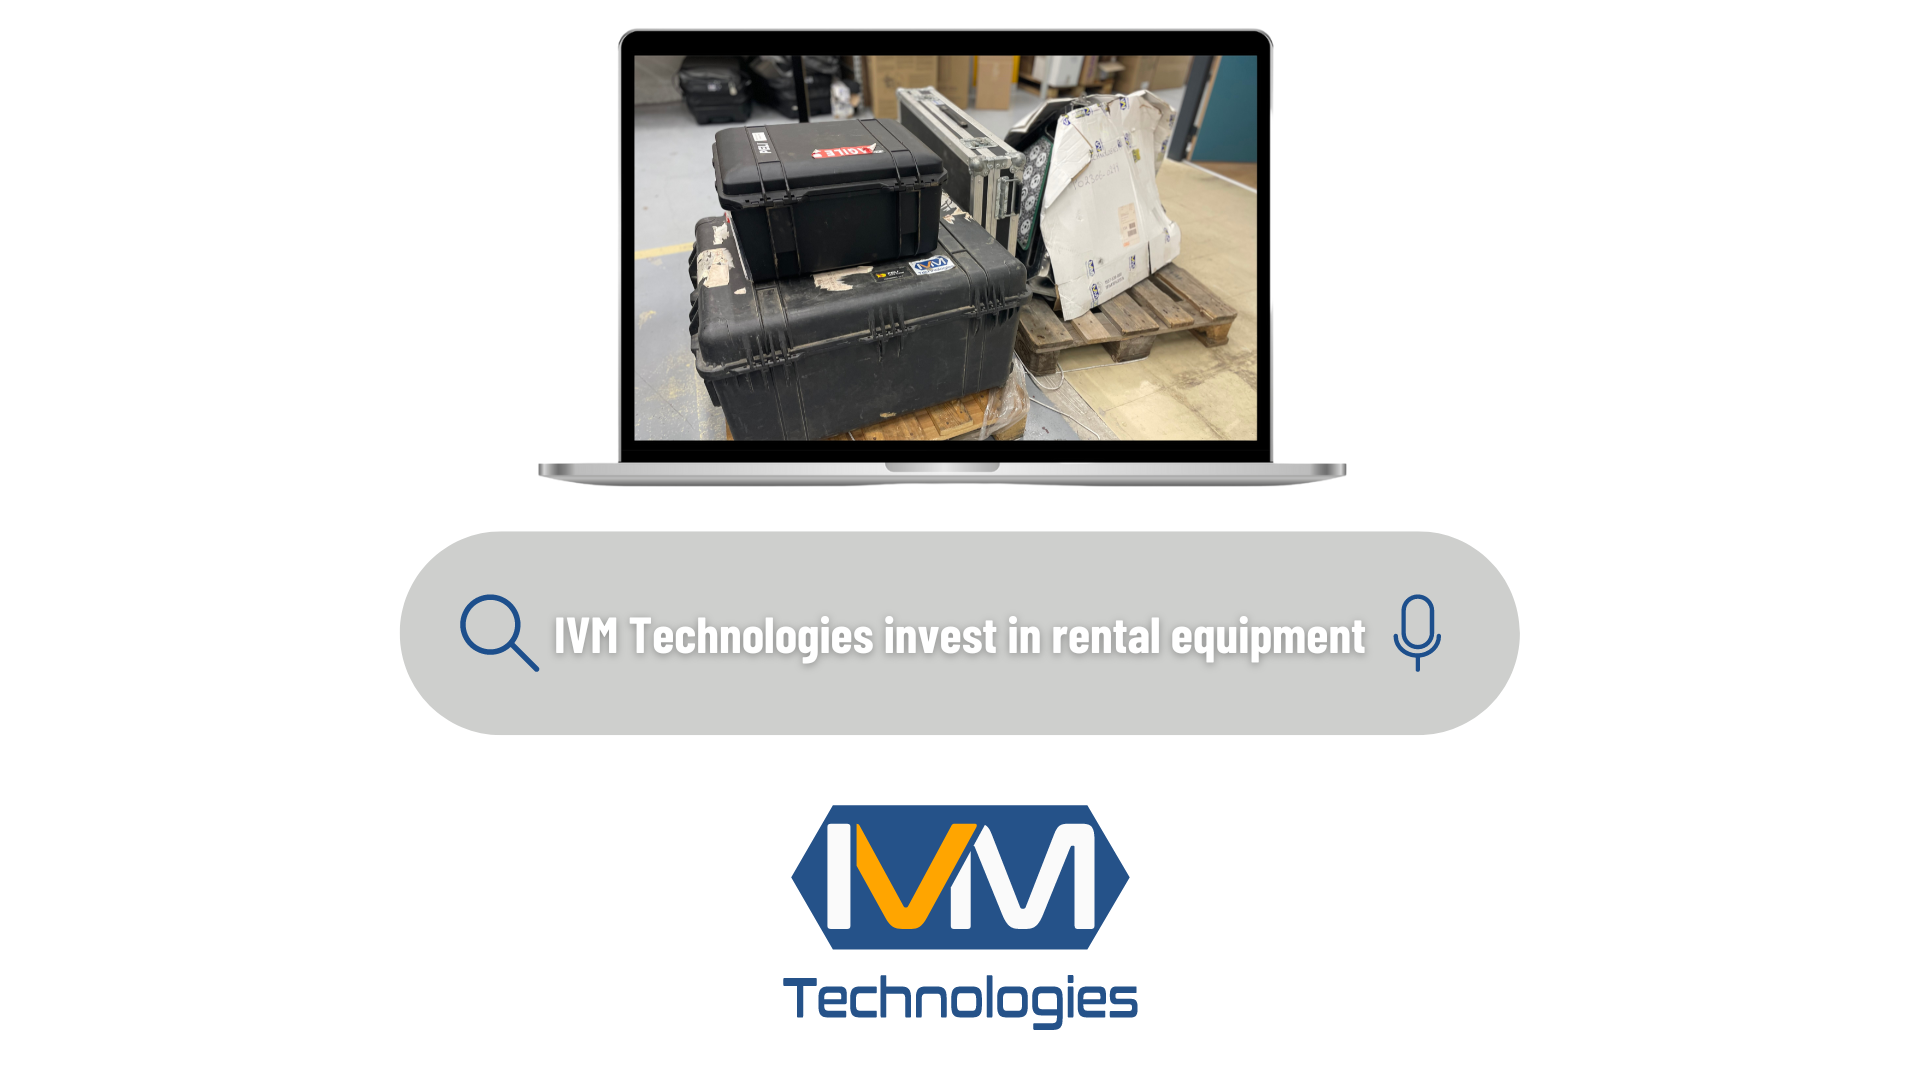 IVM Technologies invest in rental equipment